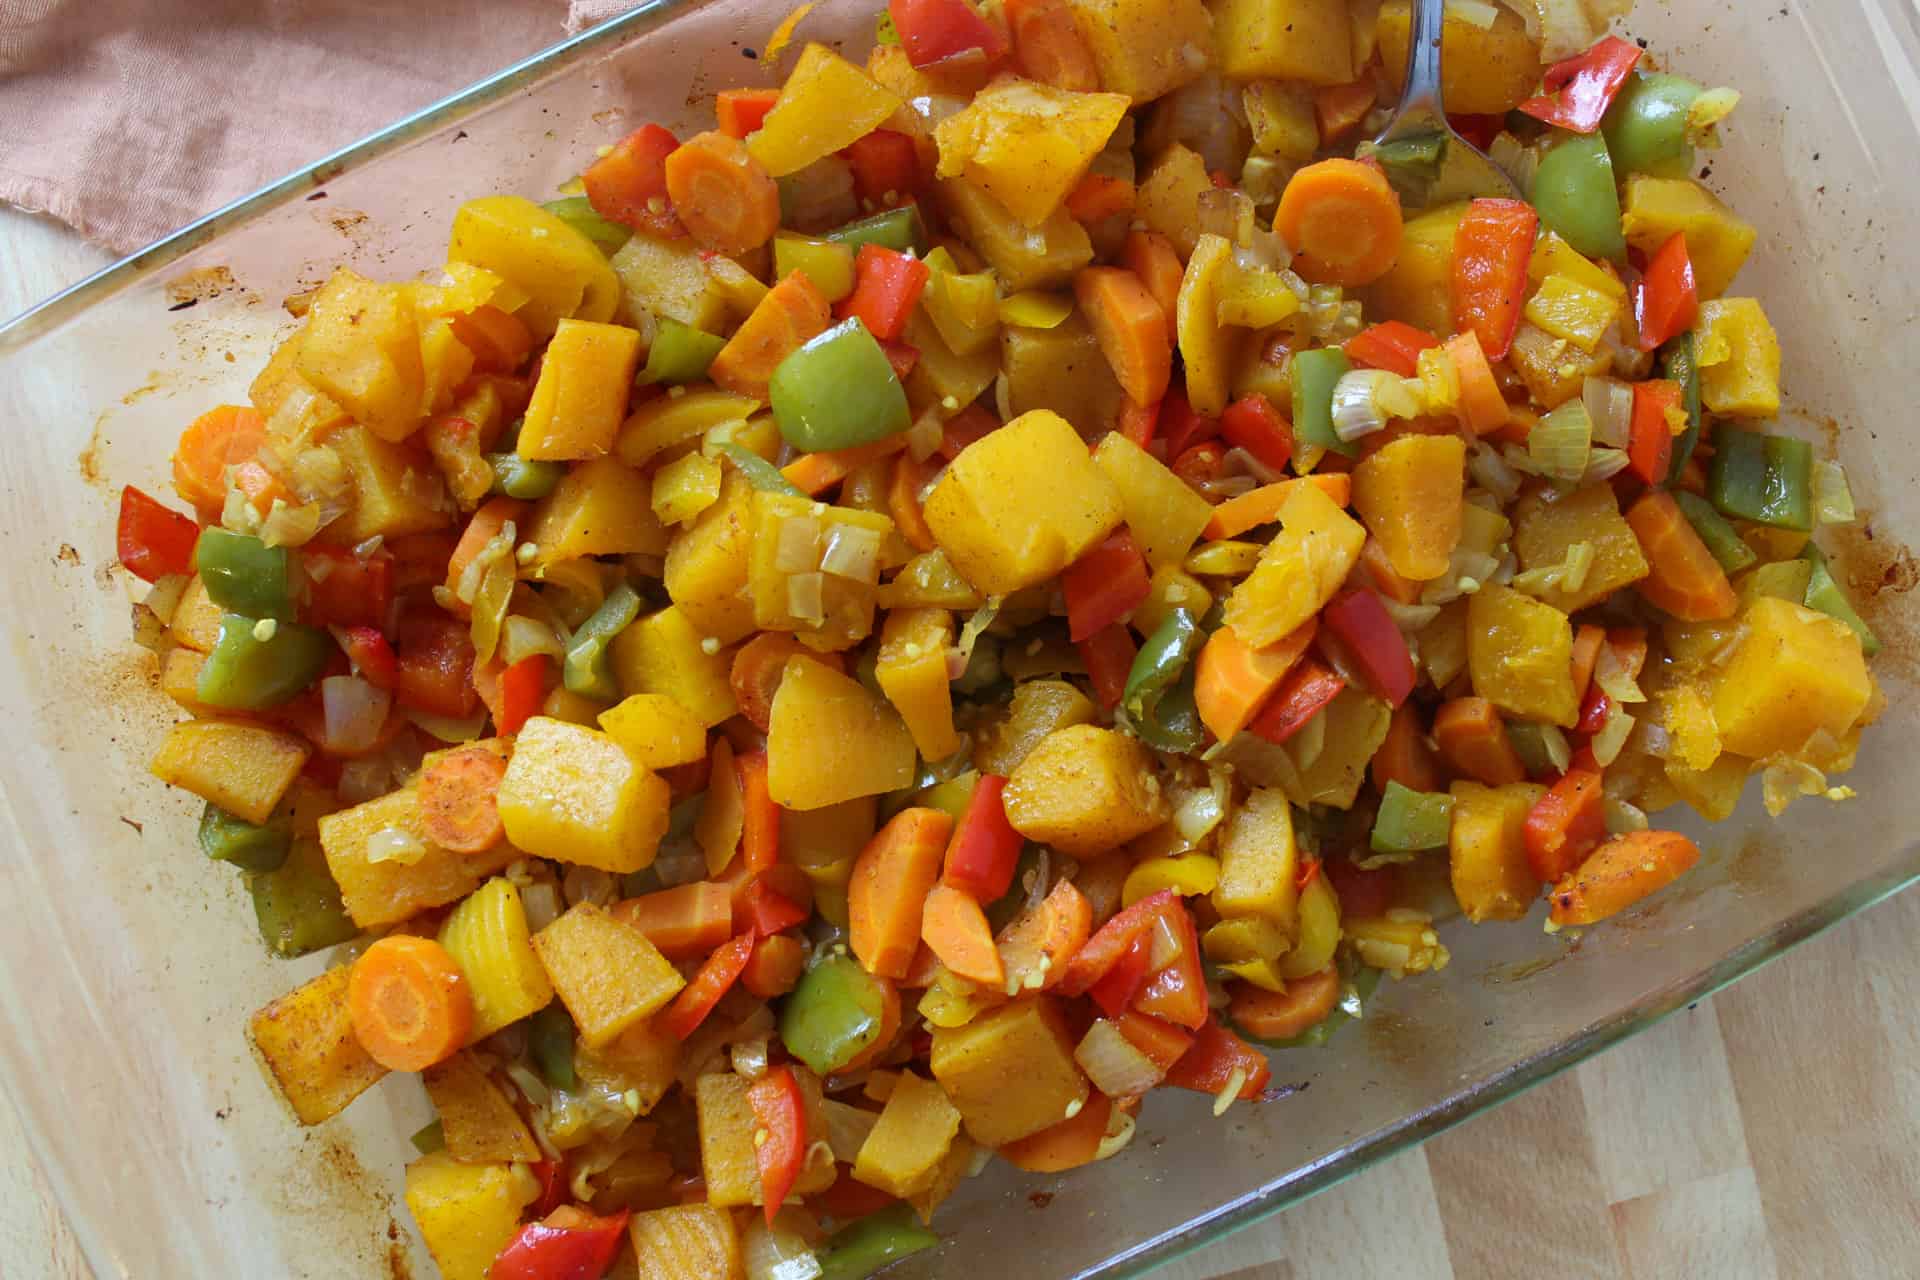 Fall veggies in a serving dish.